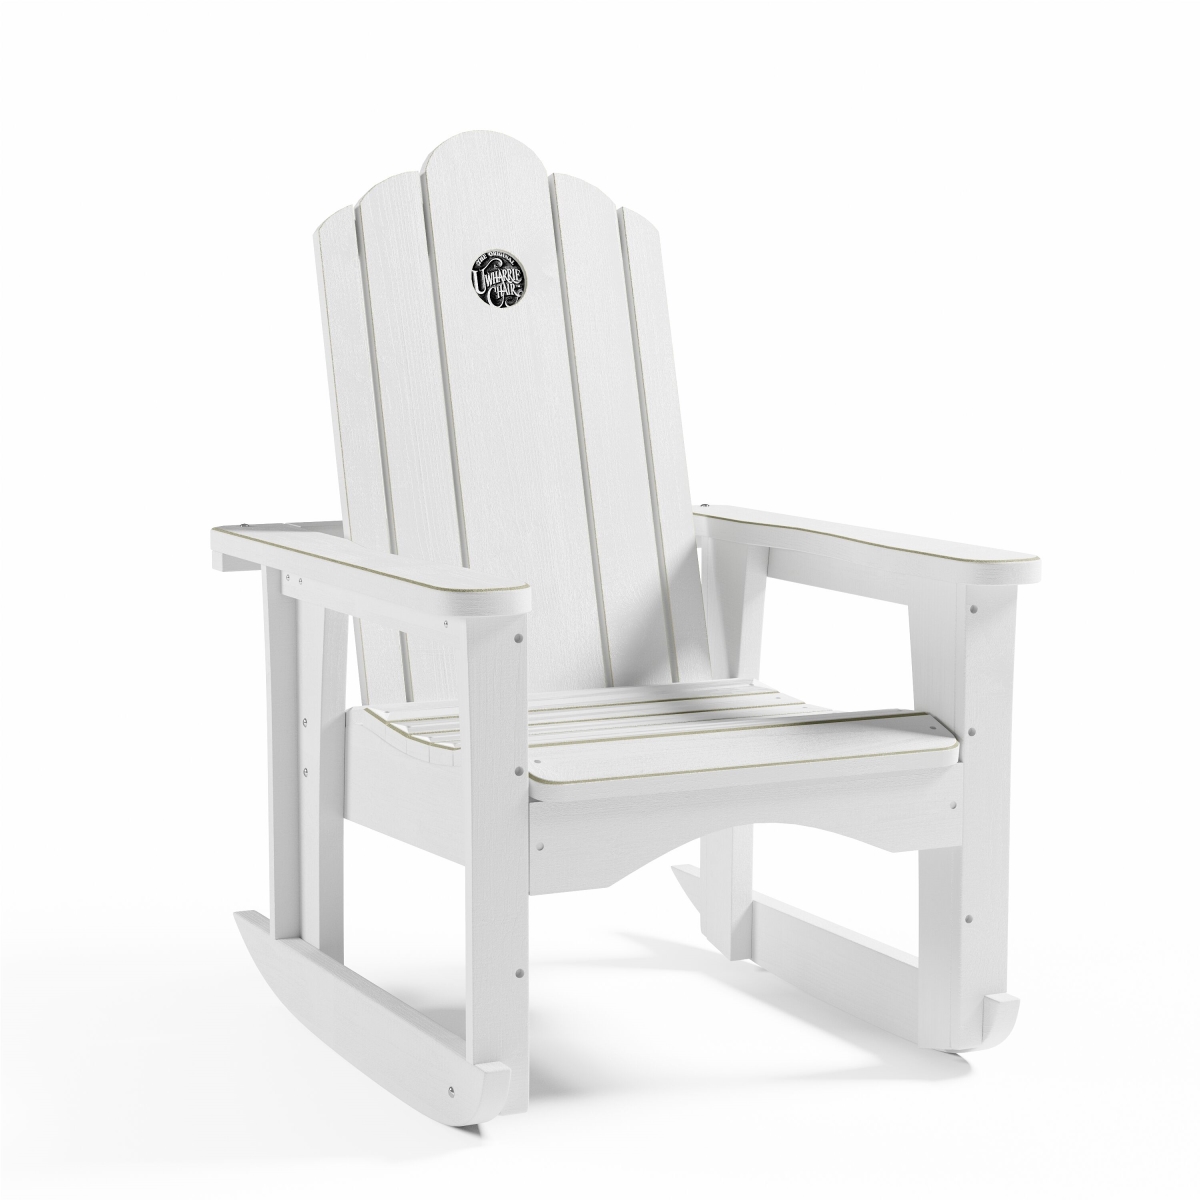 UWharrie Chair S112-020 Styxx Wood Rocker Arm Lounge Chair, Lime Pine - 24 x 33 x 38 in.